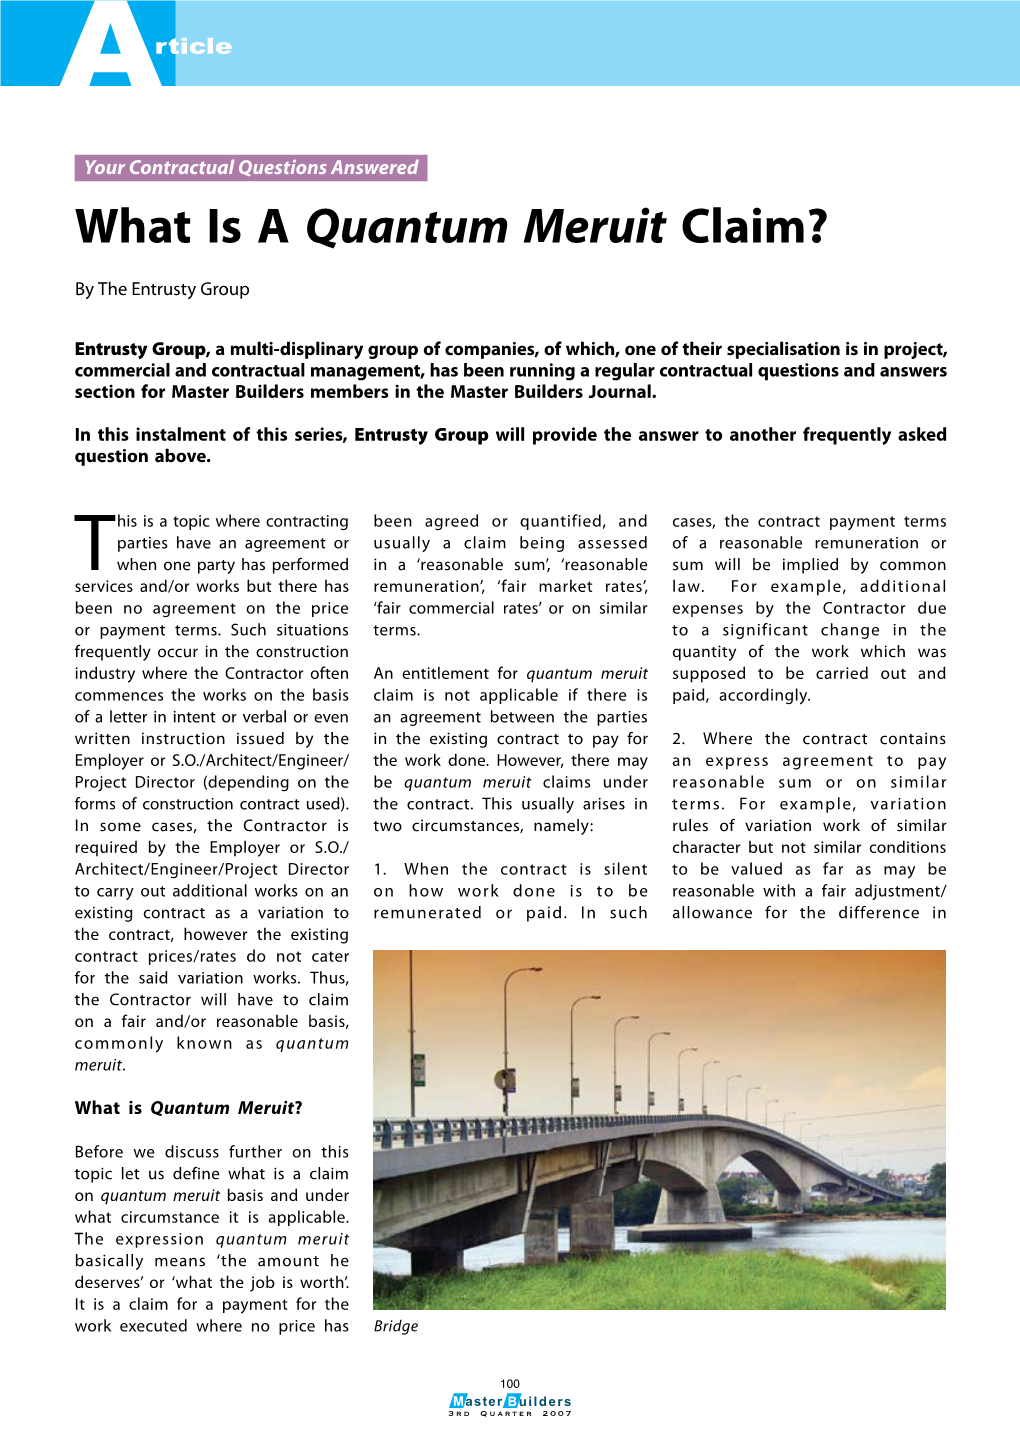 What Is a Quantum Meruit Claim?